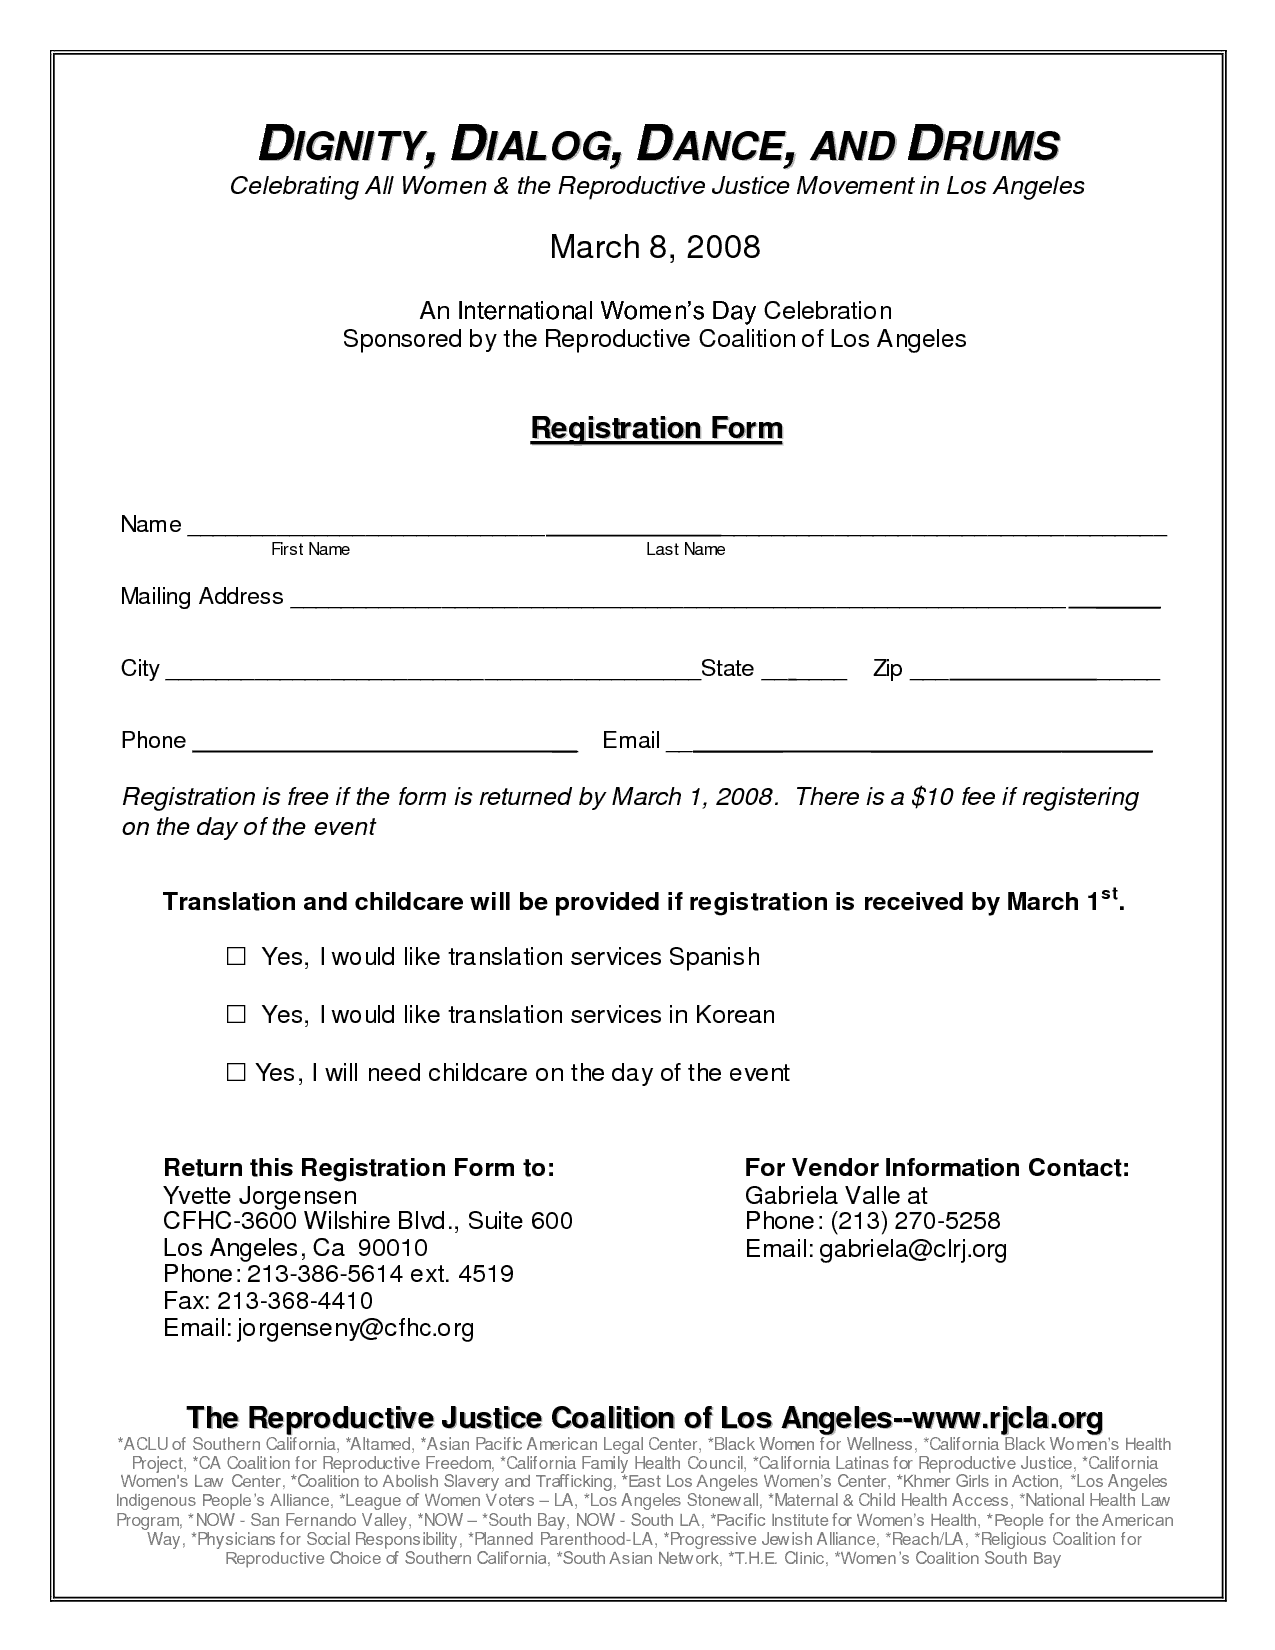 Academy Registration Form Template 7.